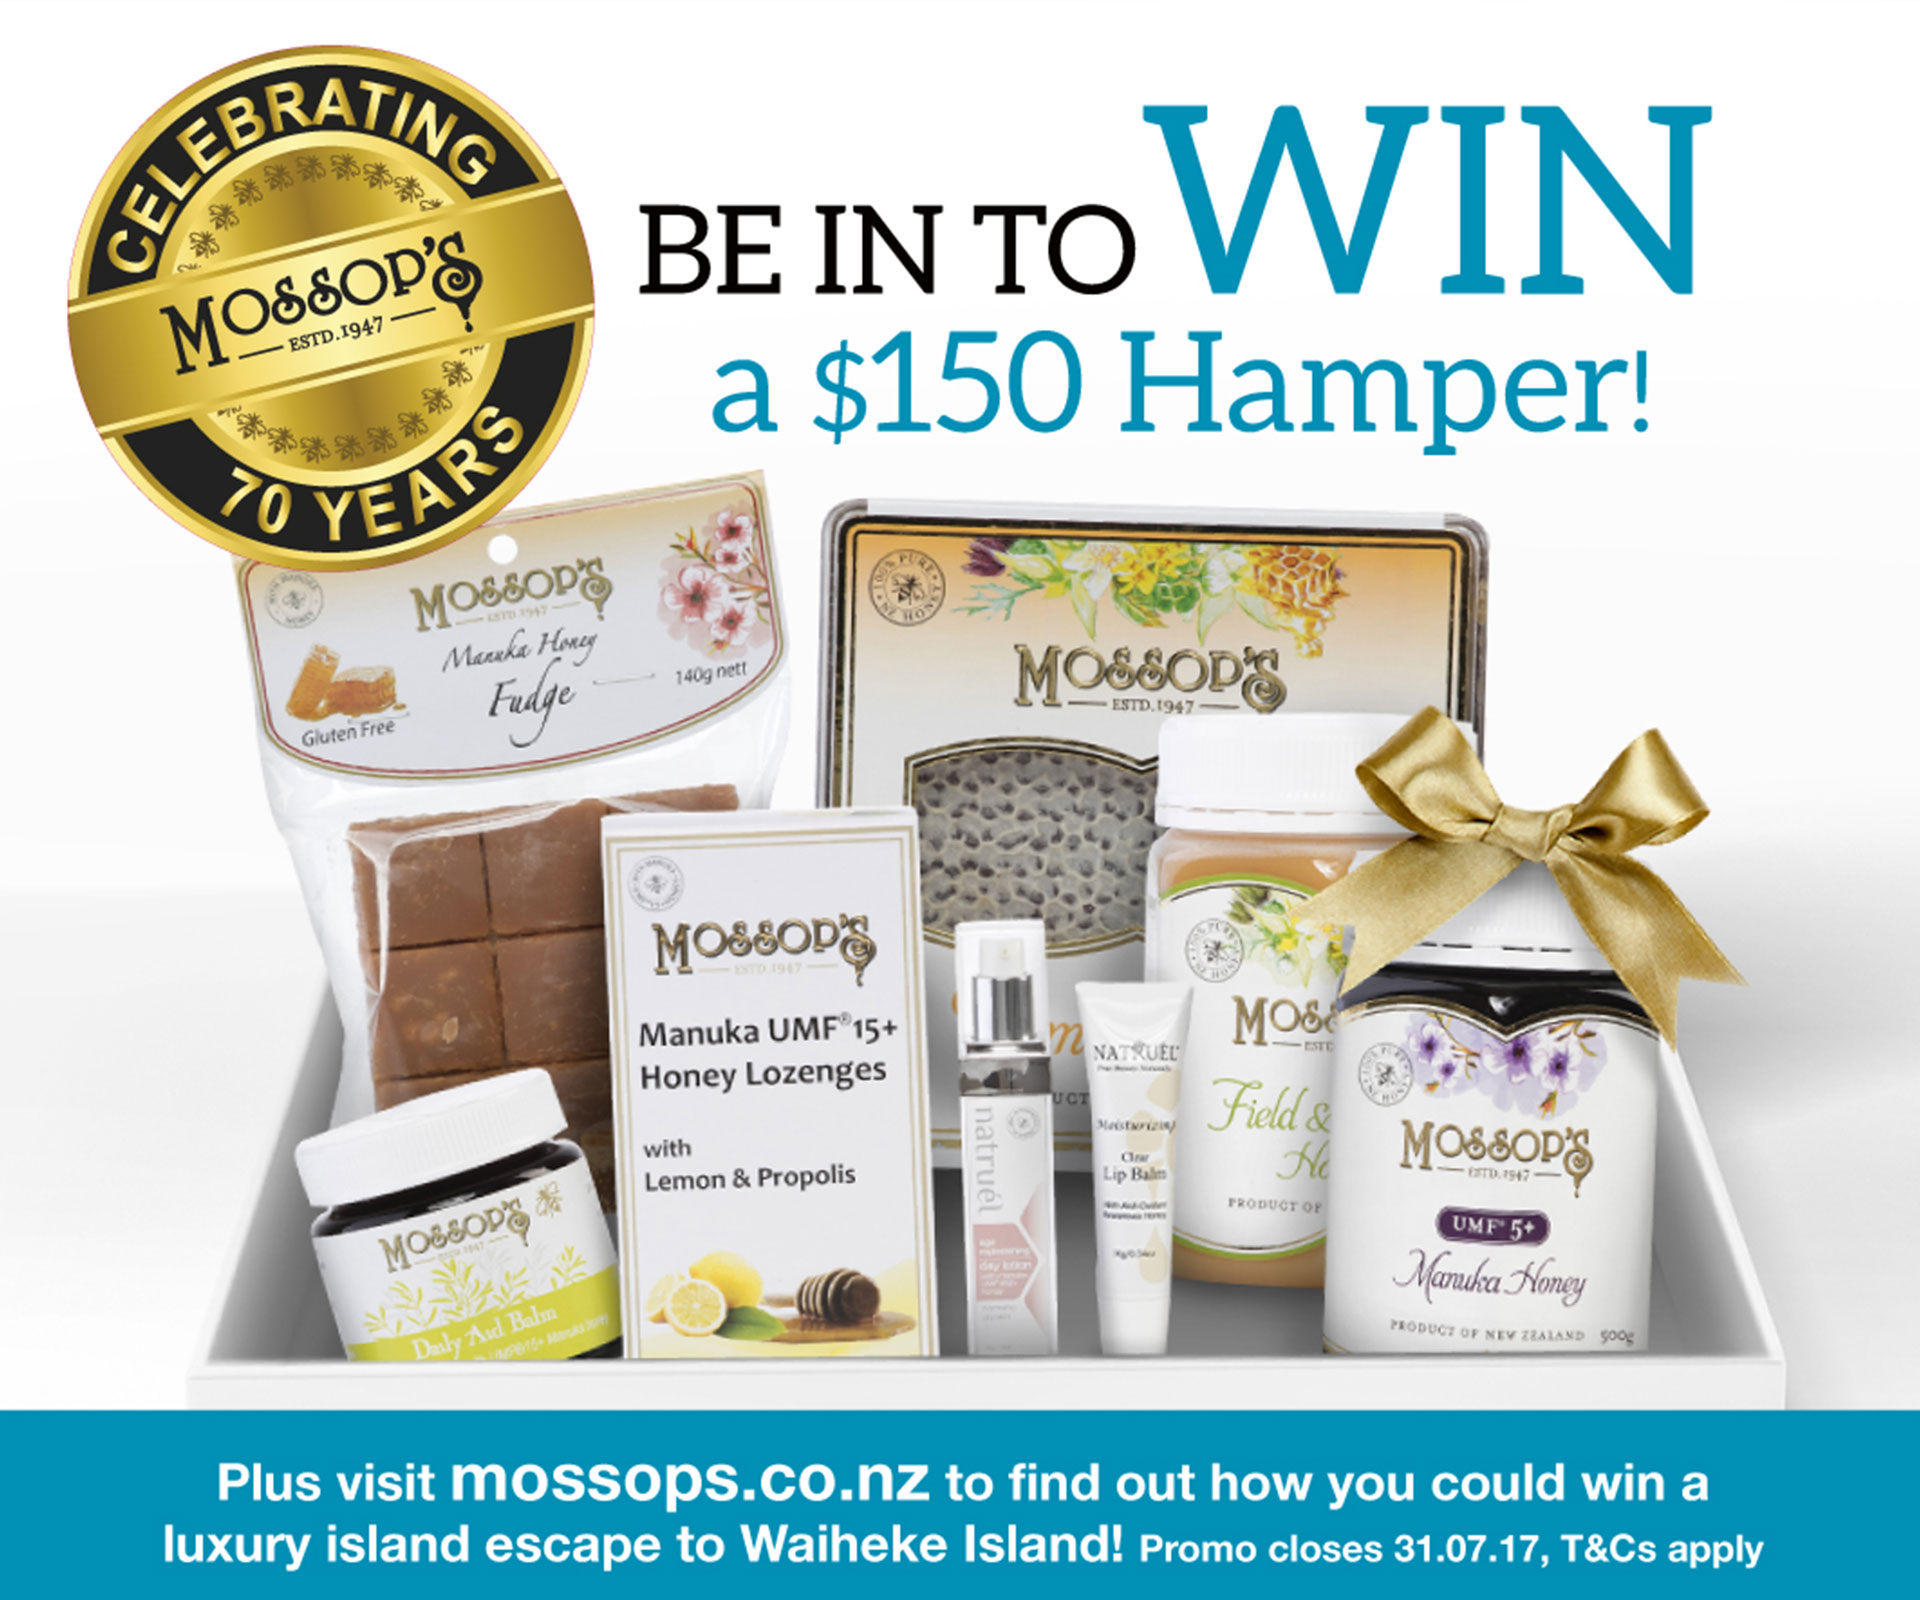 Win a Mossop’s honey Hamper worth $150